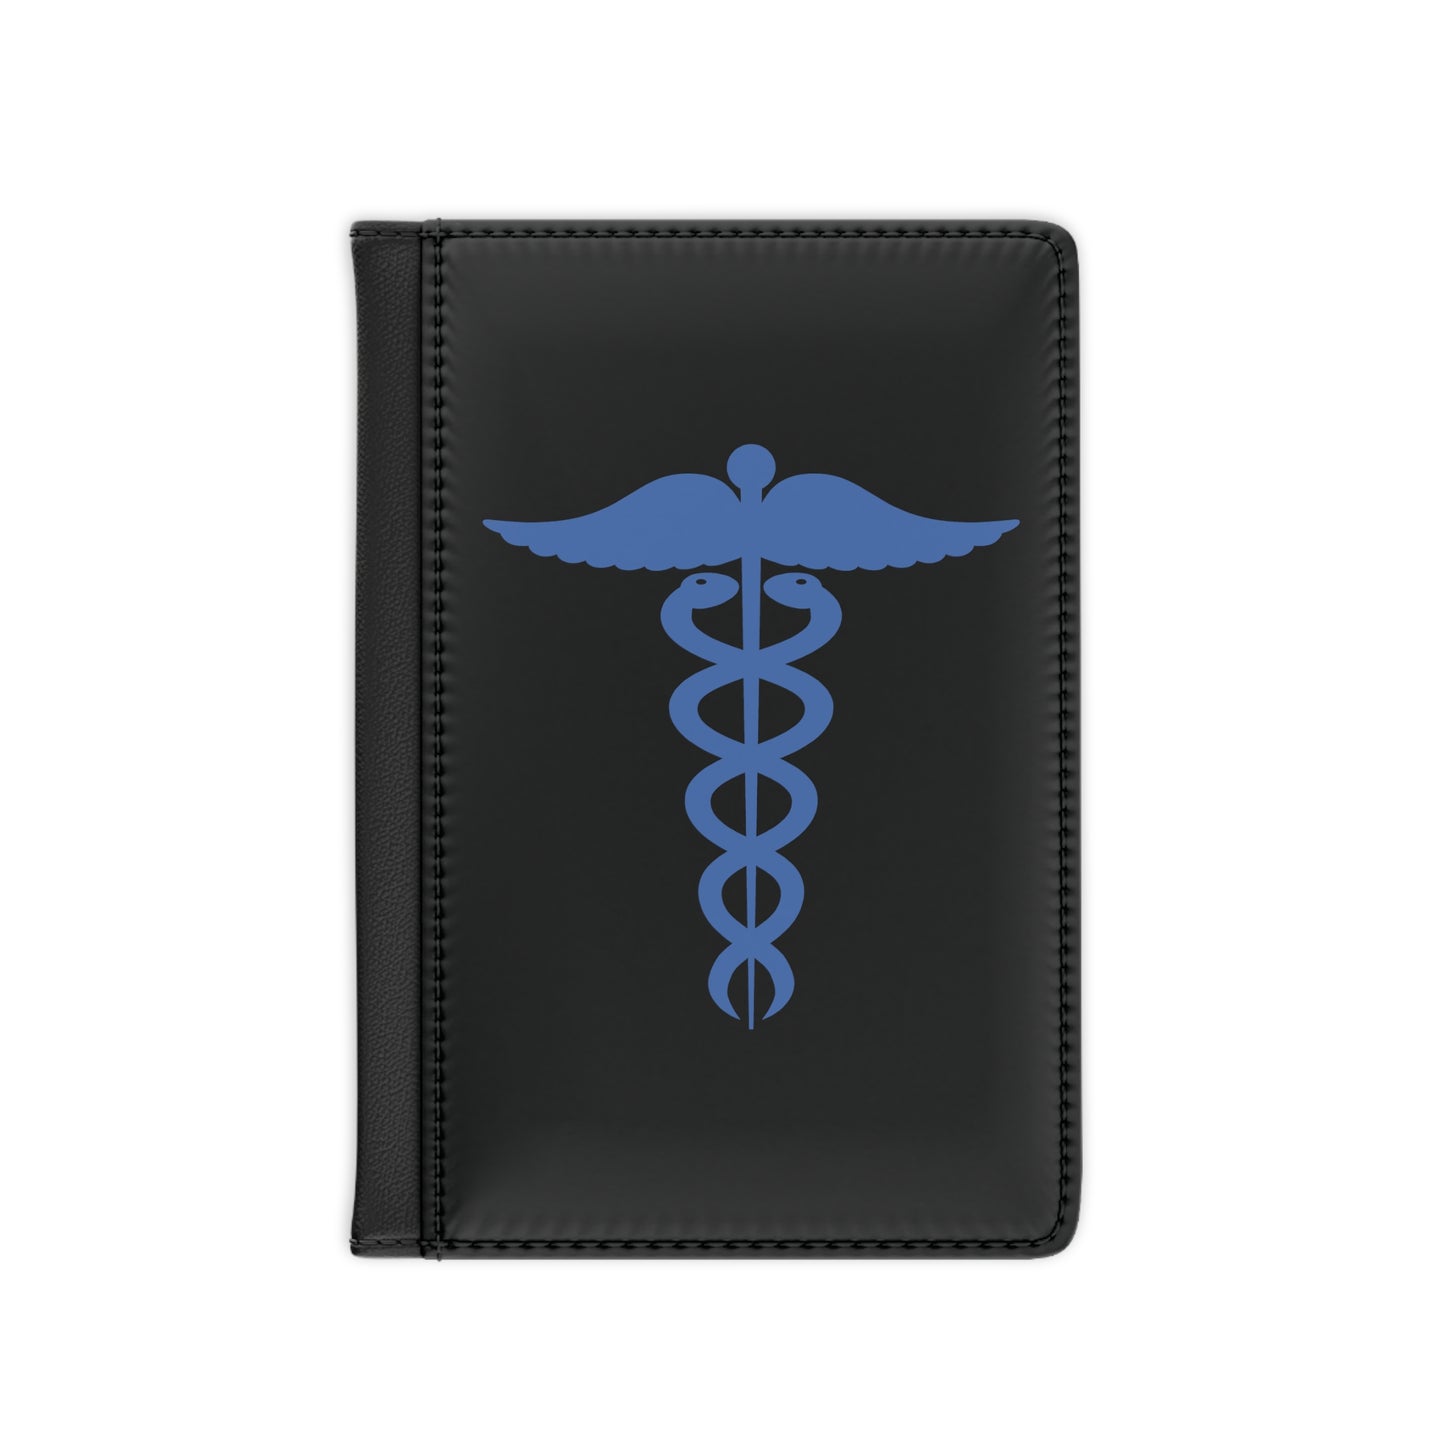 Nurse / Medical Passport Cover